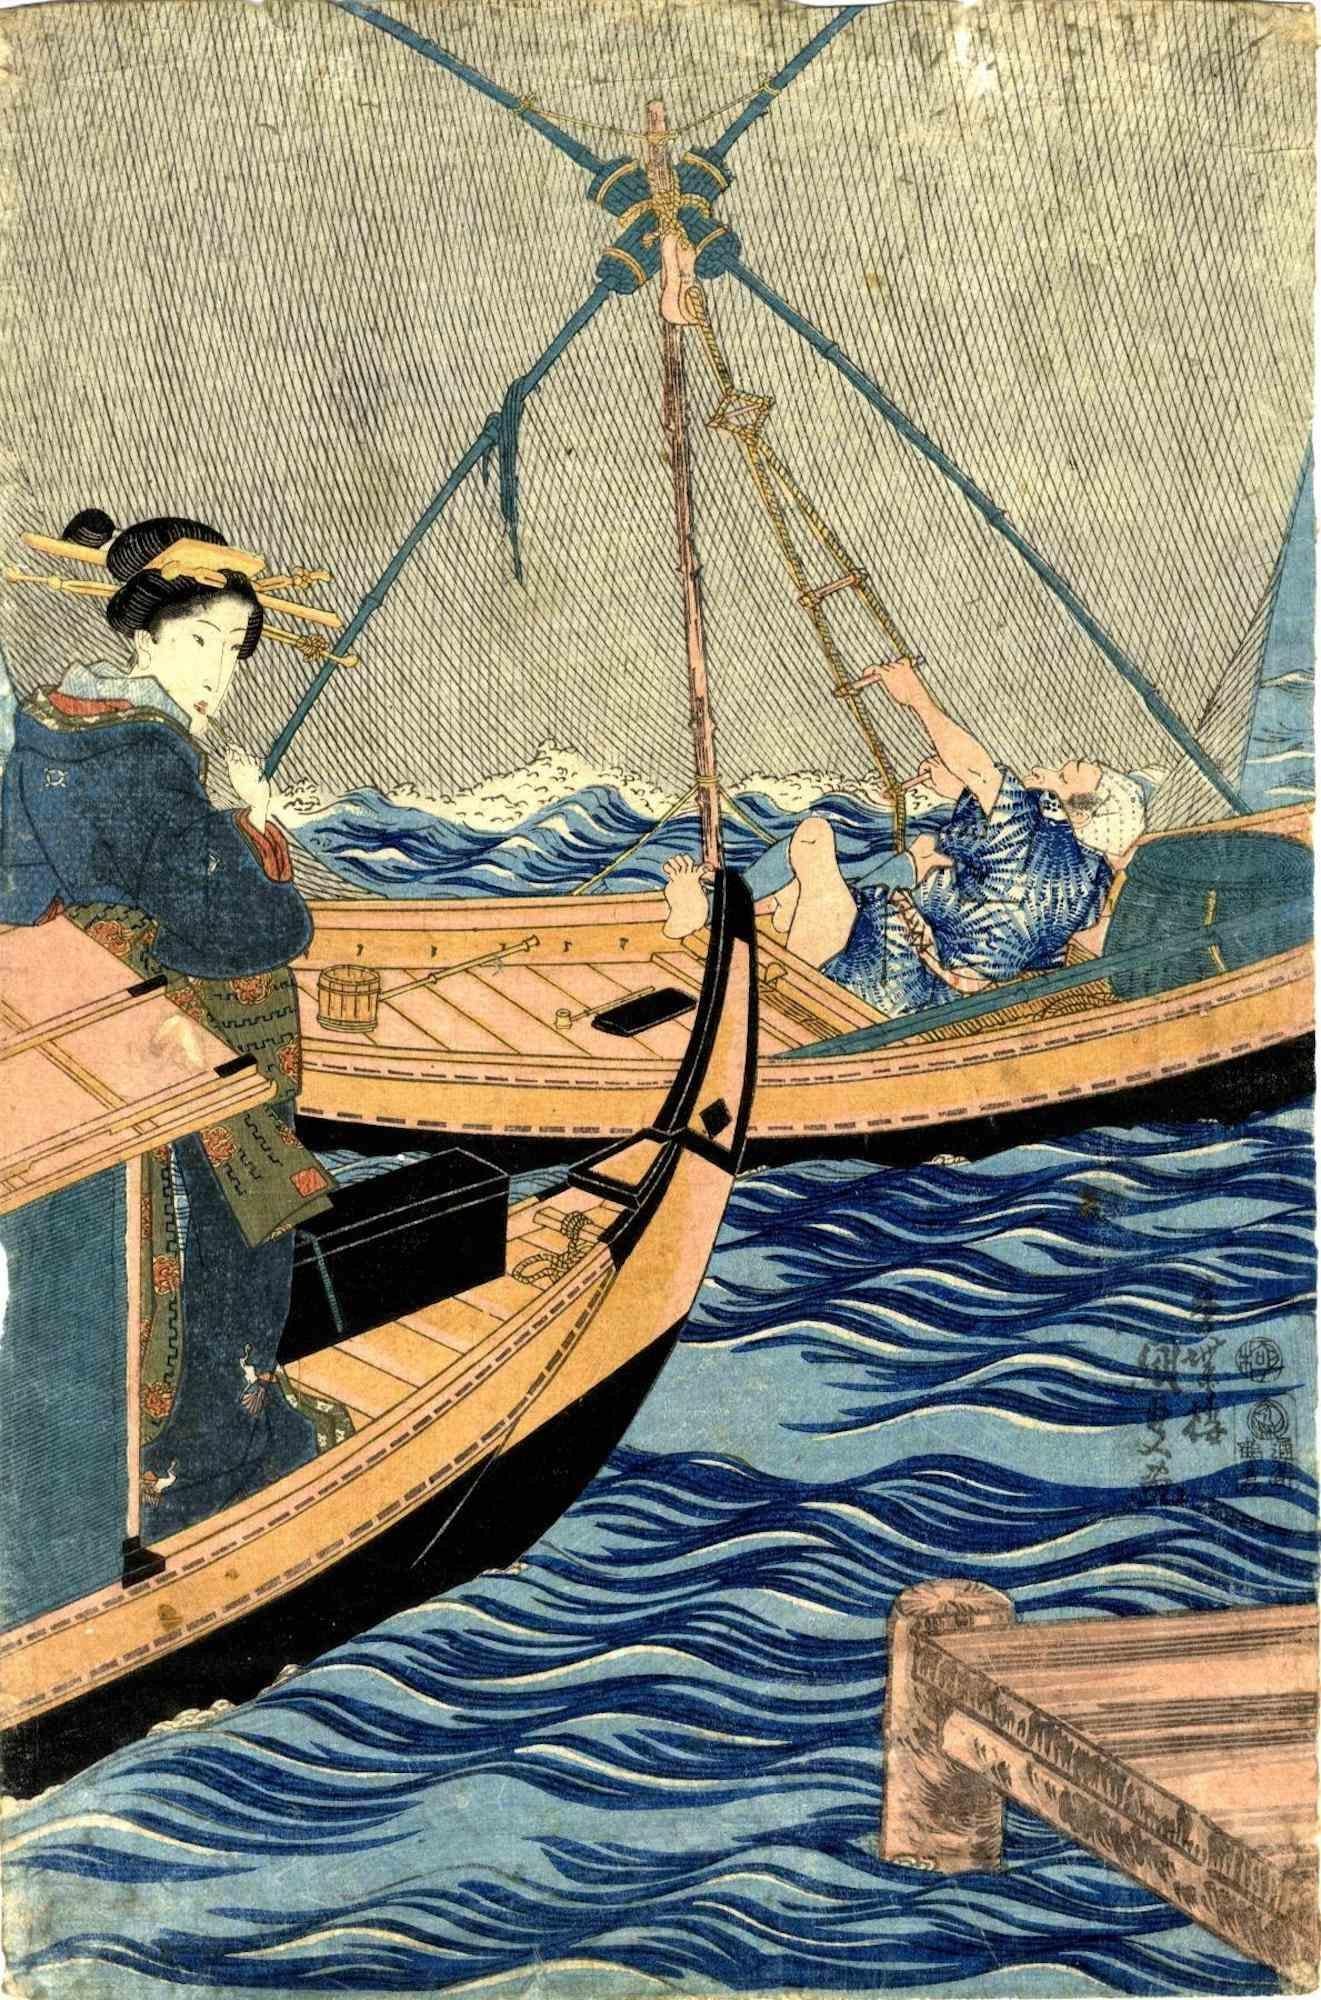 Fishing Boats is an original modern artwork realized by Utagawa Kunisada in 1860.

Signature Kochoro Kunisada ga. Publisher: Tsuruya Kiemon. Censored by Kiwame. Pleasure and fishing boat on the Sumida near a pier before a storm.

Very good